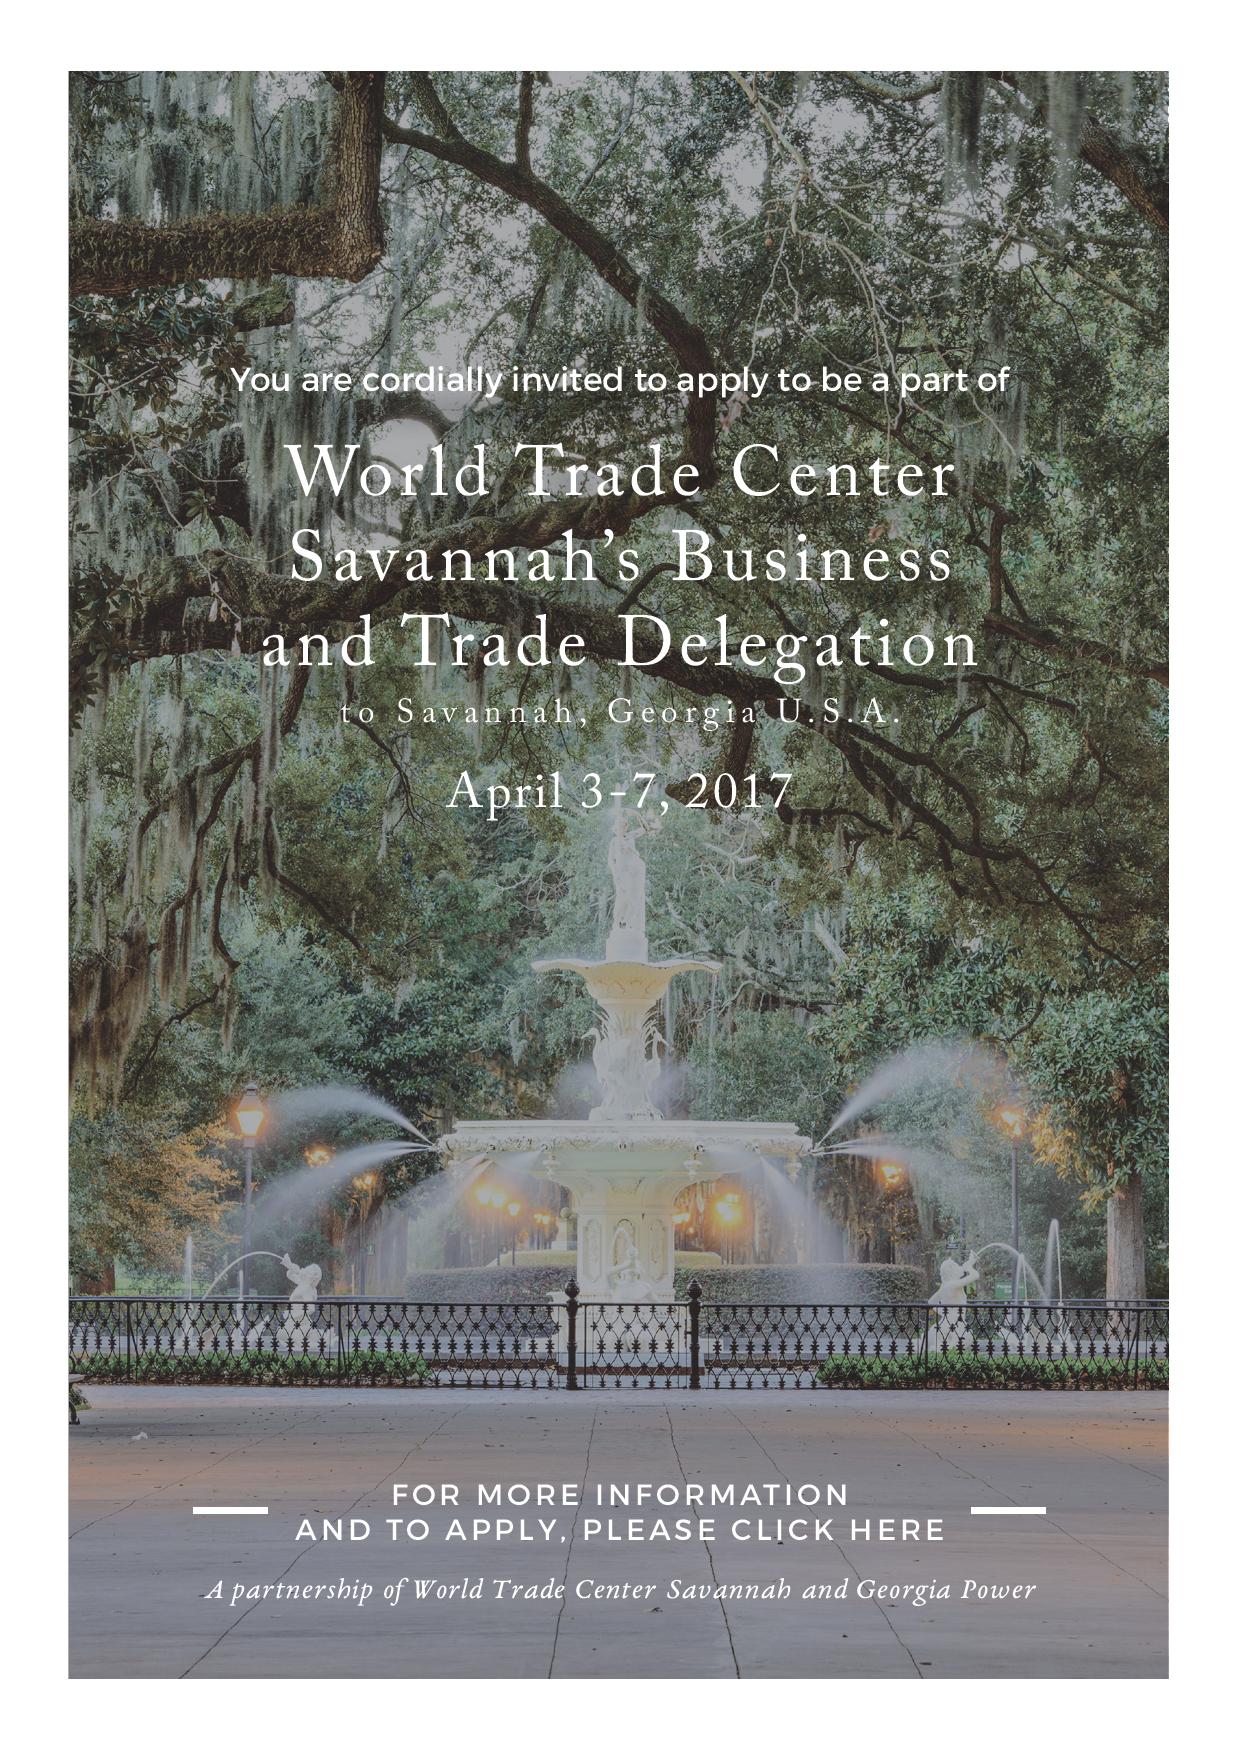 INVITATION: World Trade Center Savannah’s Business and Trade Delegation to Georgia USA